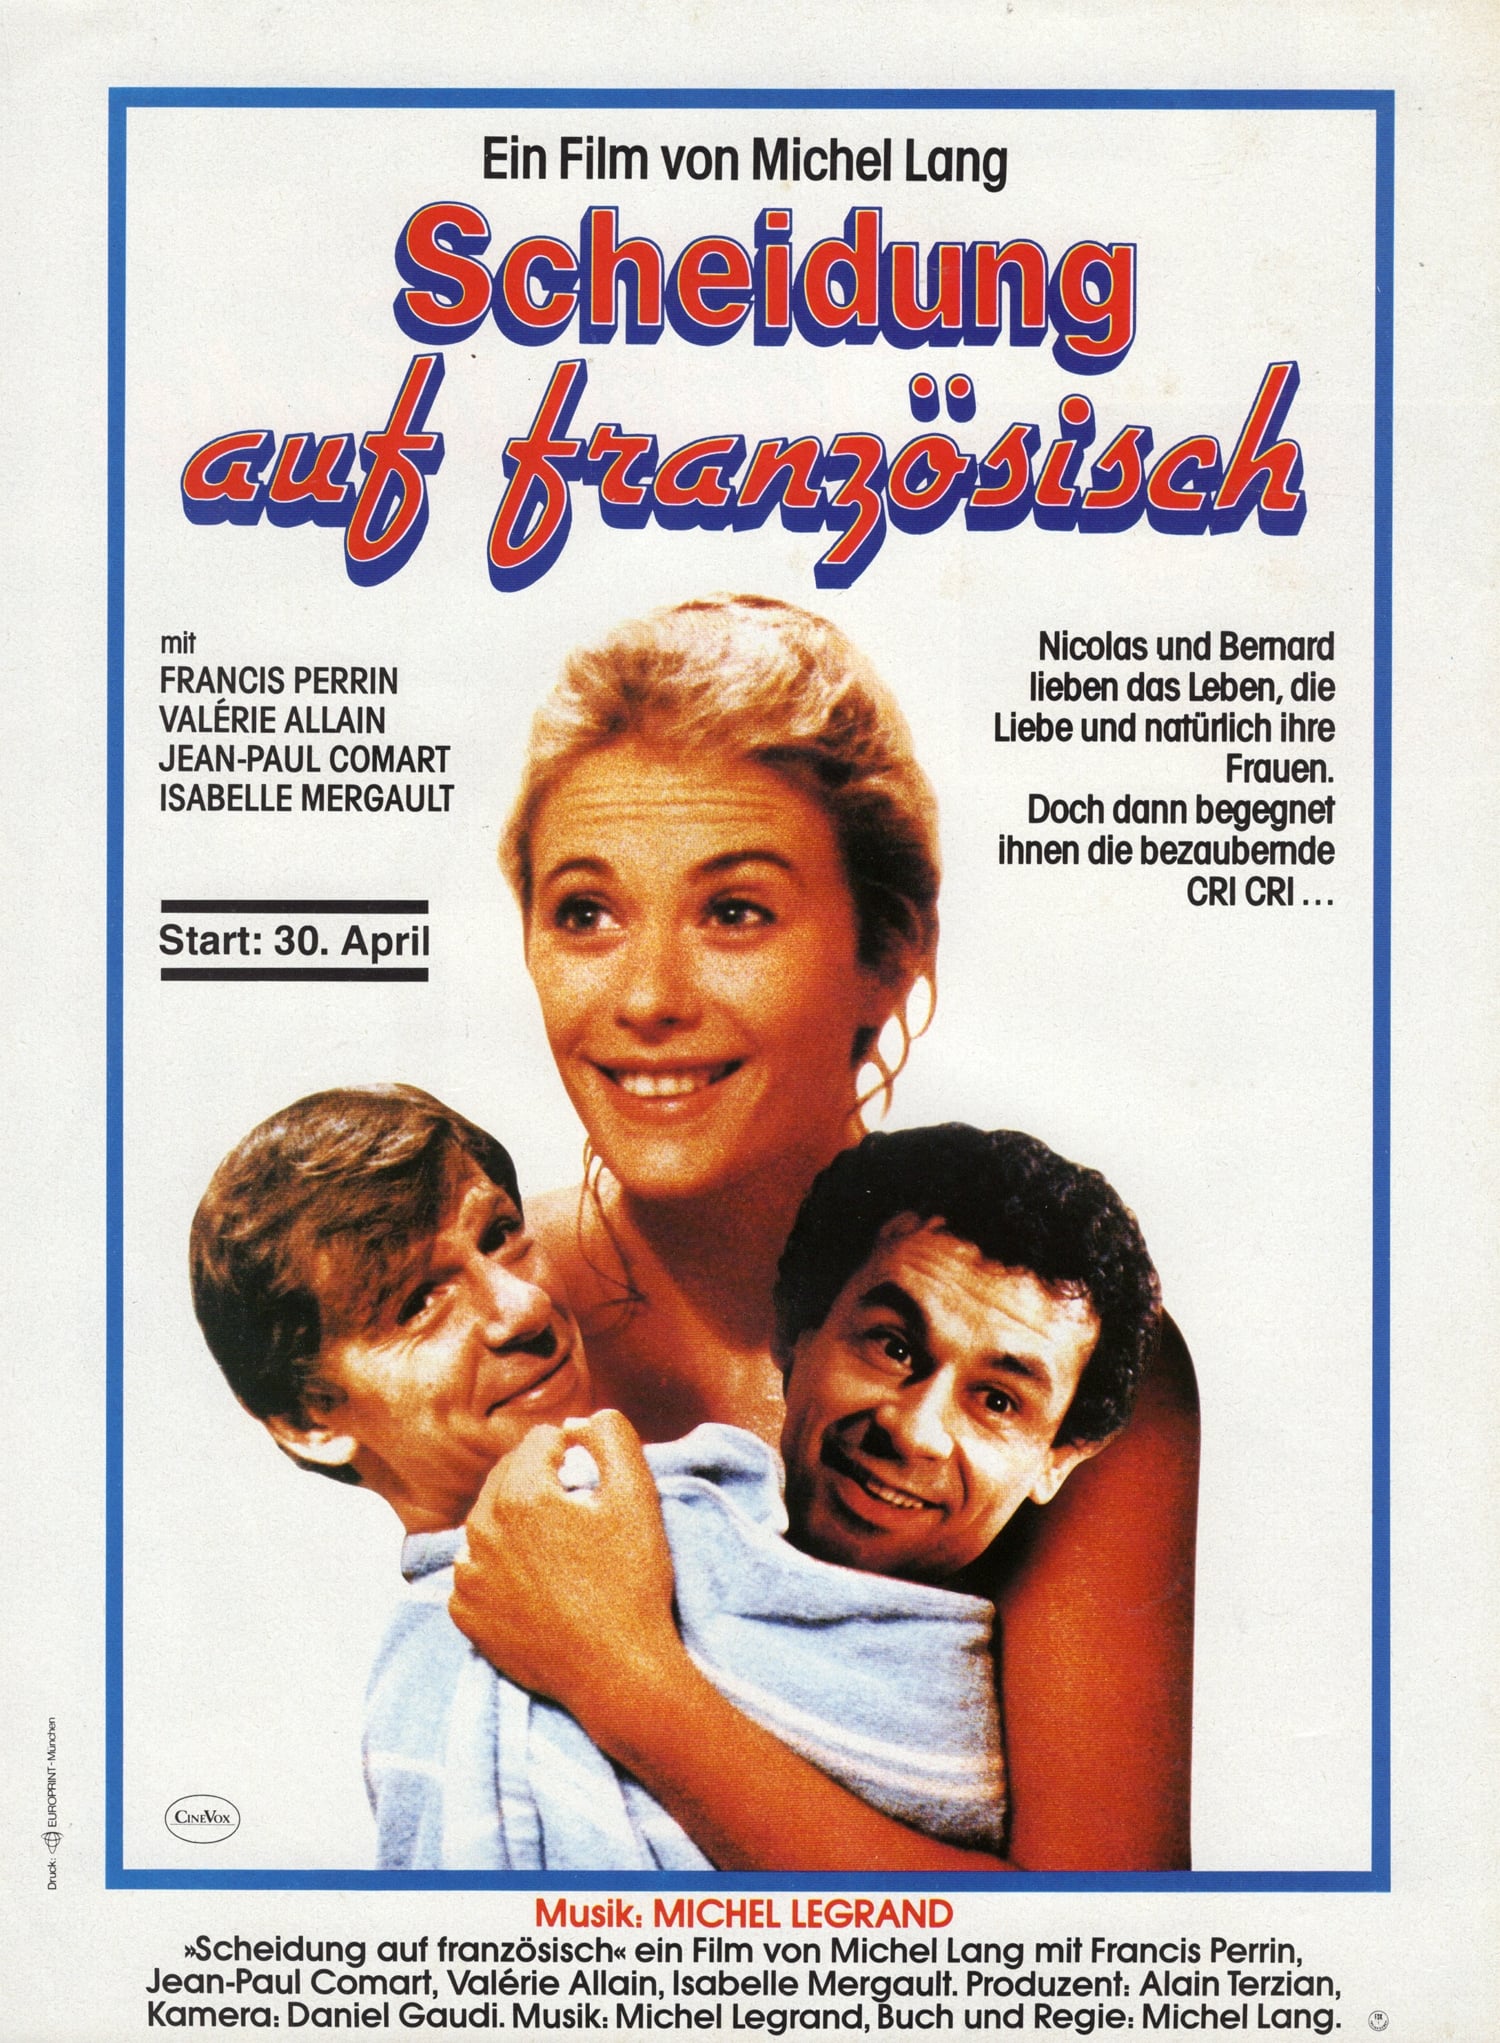 Club de rencontres (1988)